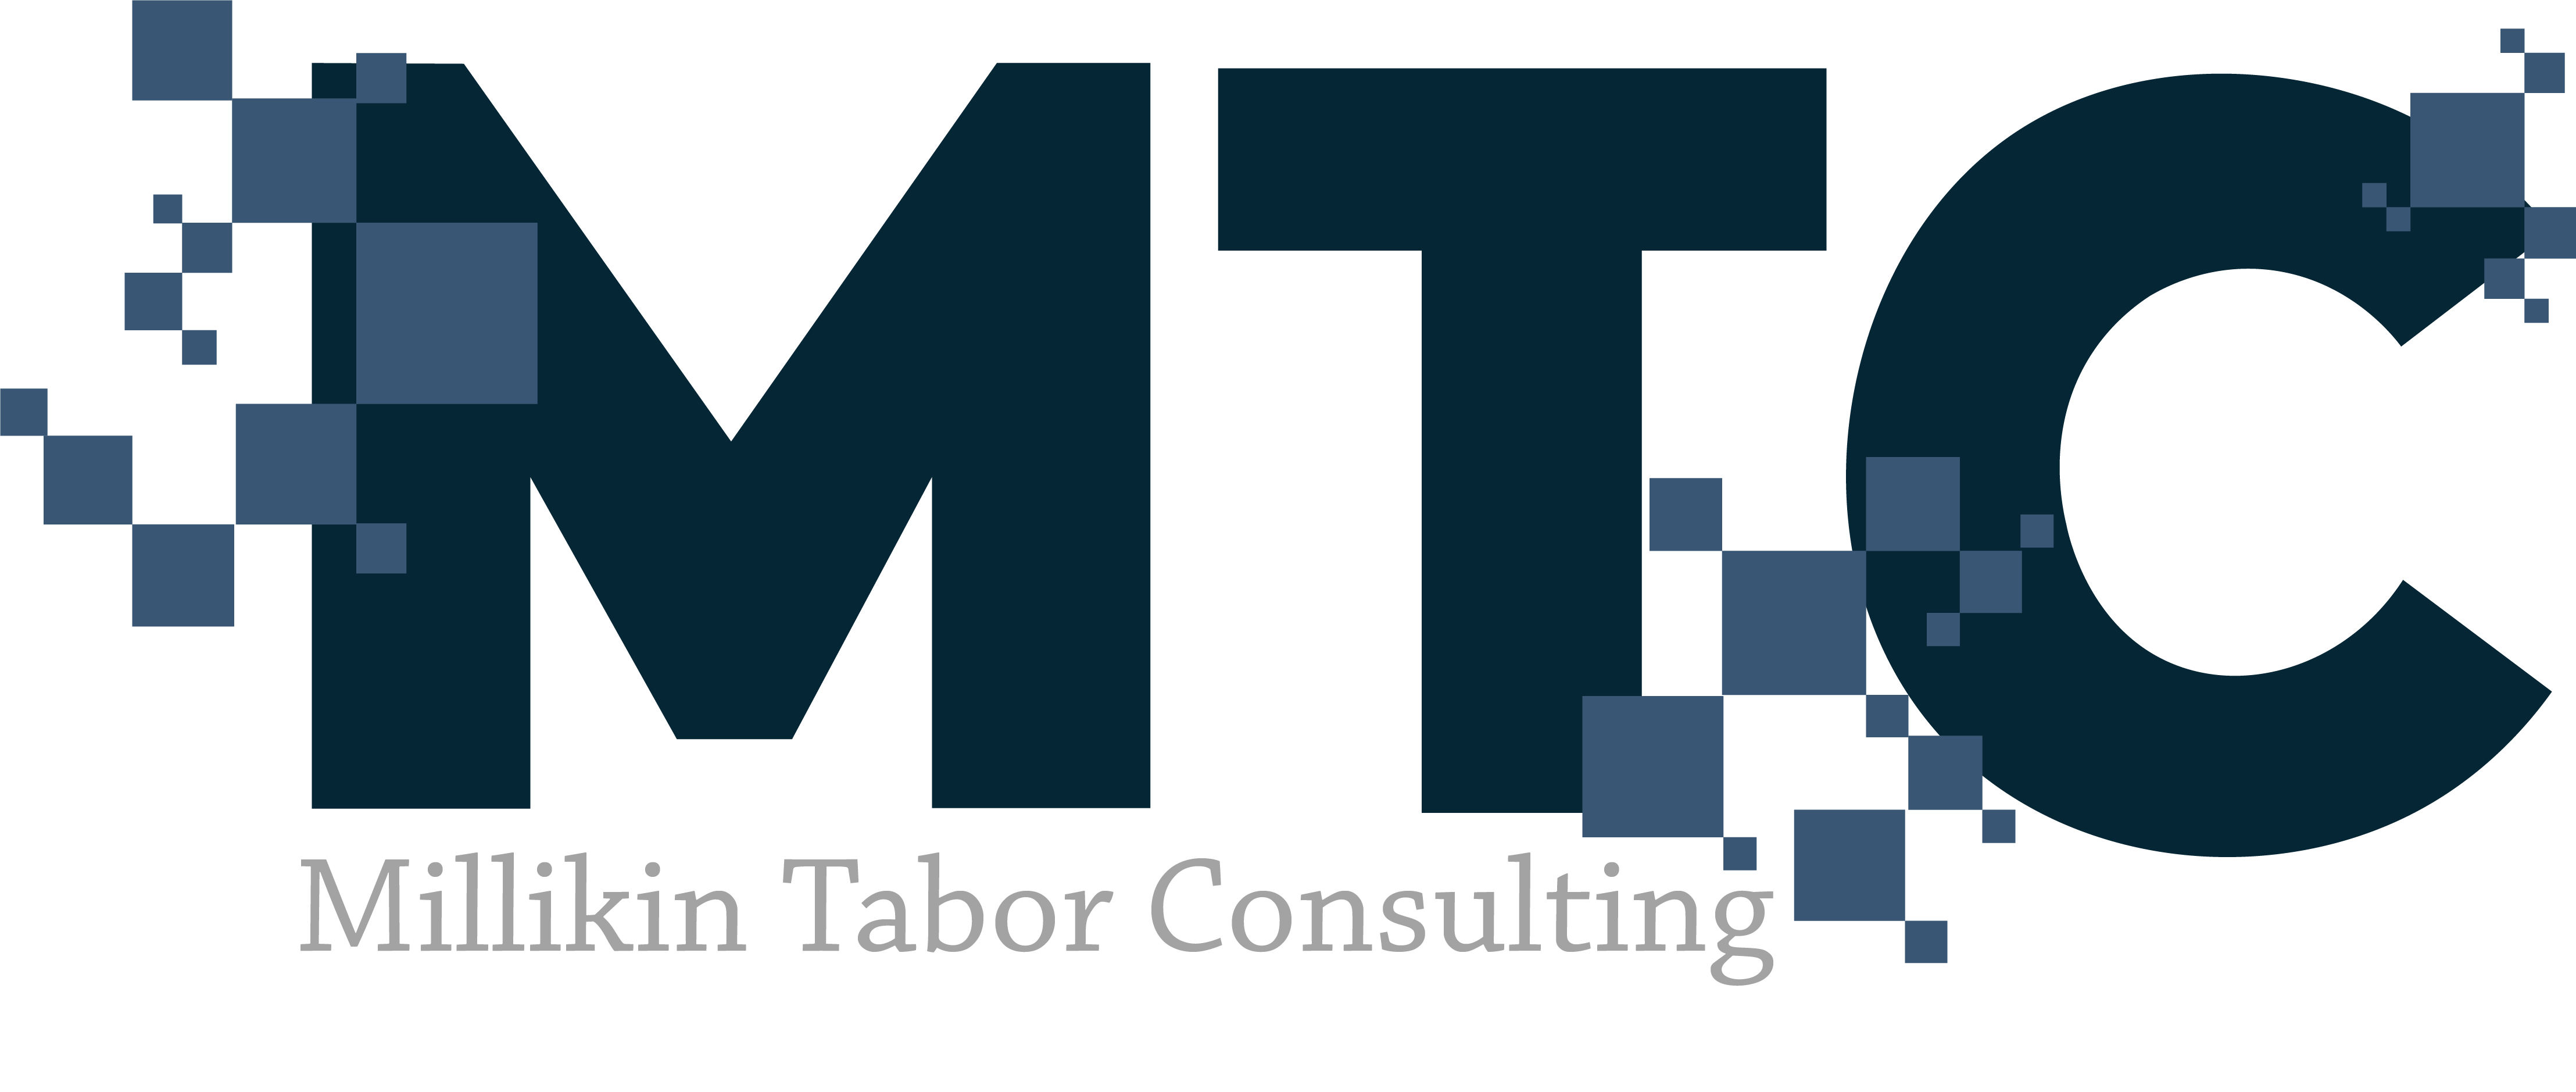 Millikin Tabor Consulting logo